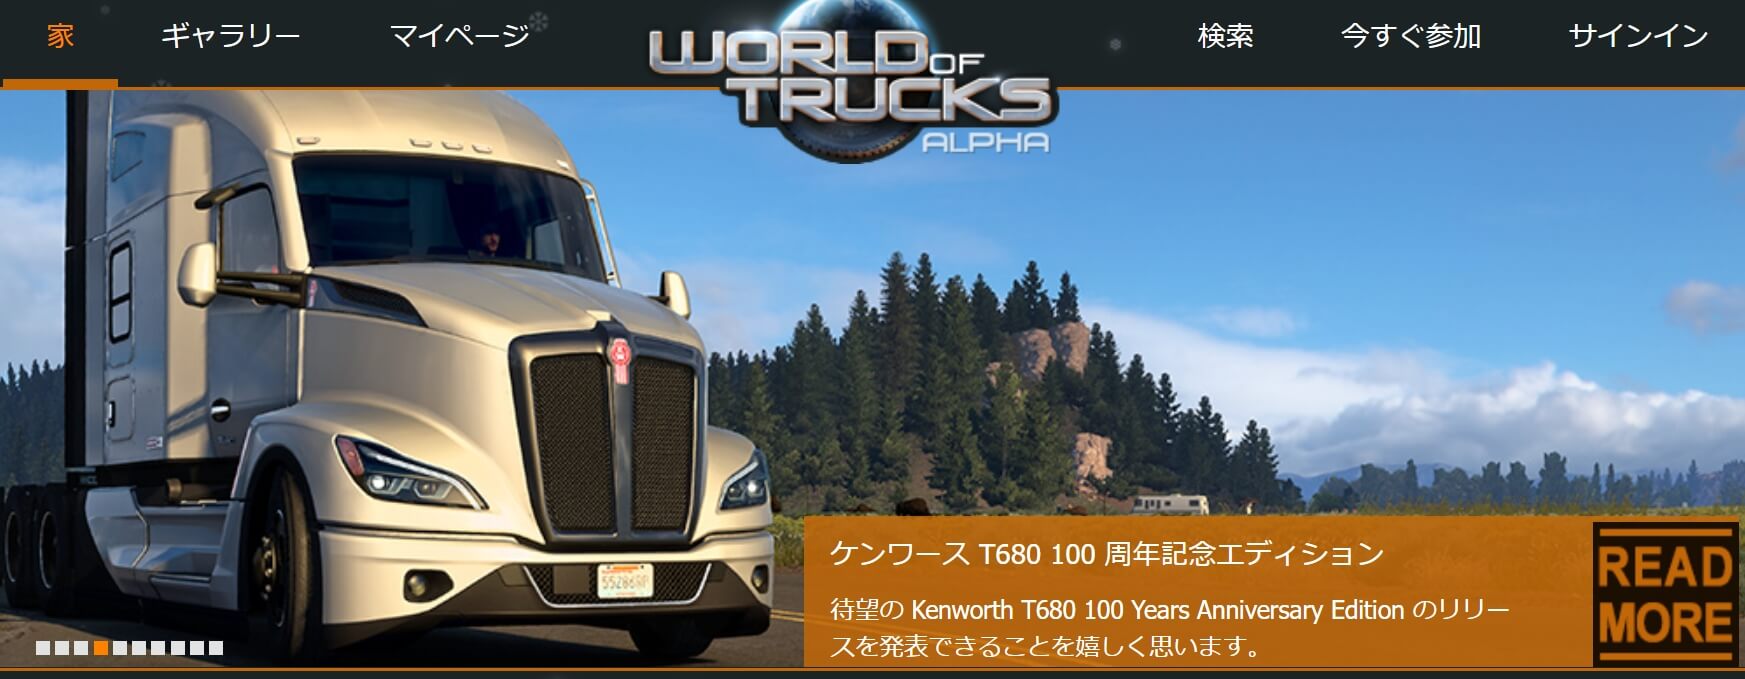 World of Trucks-index-001